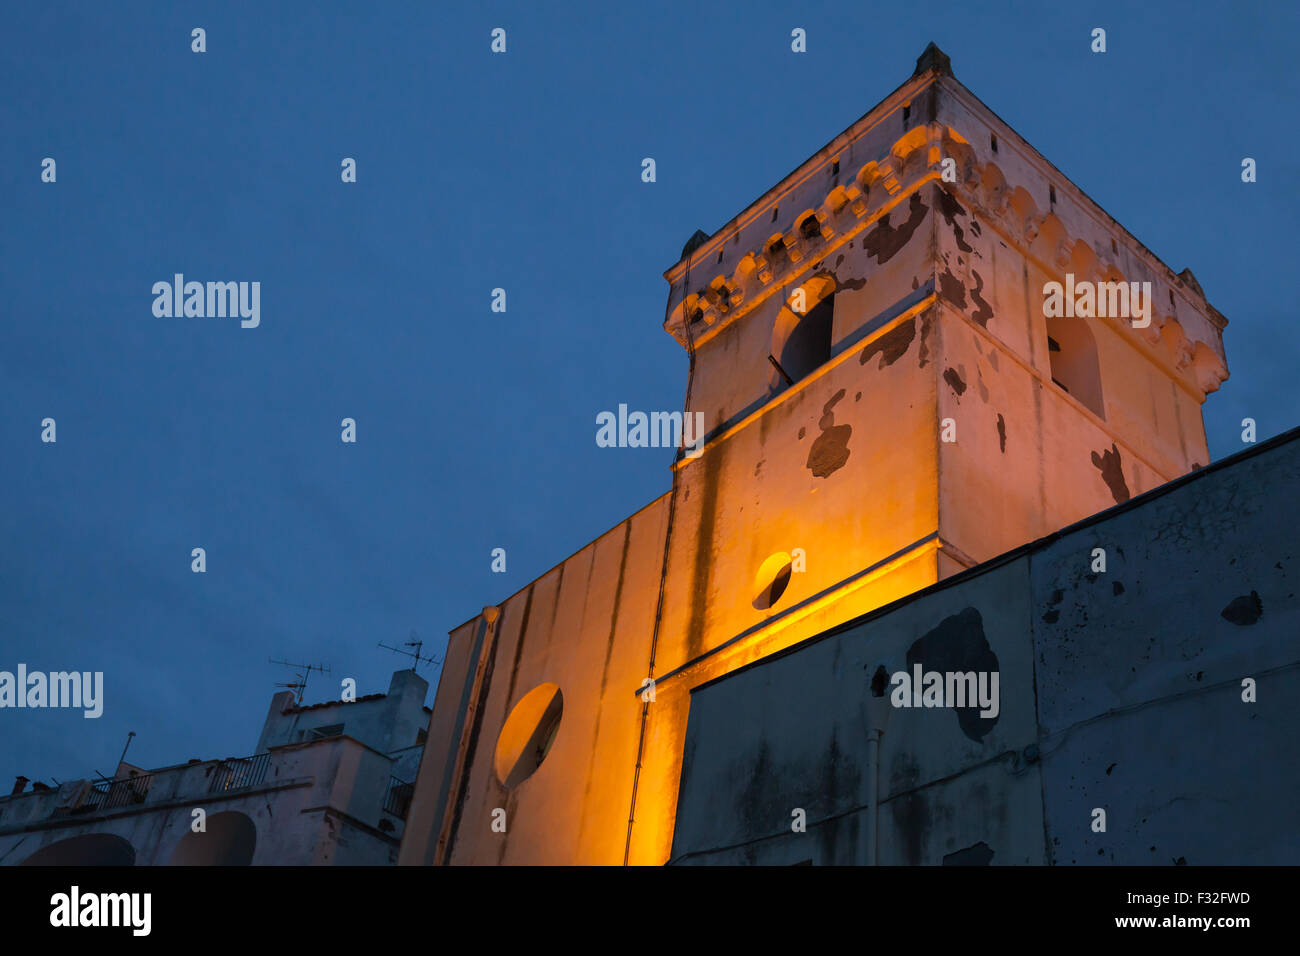 Santa Maria Assunta. Illuminated church facade over dark blue sky, Ischia Porto, Italy Stock Photo